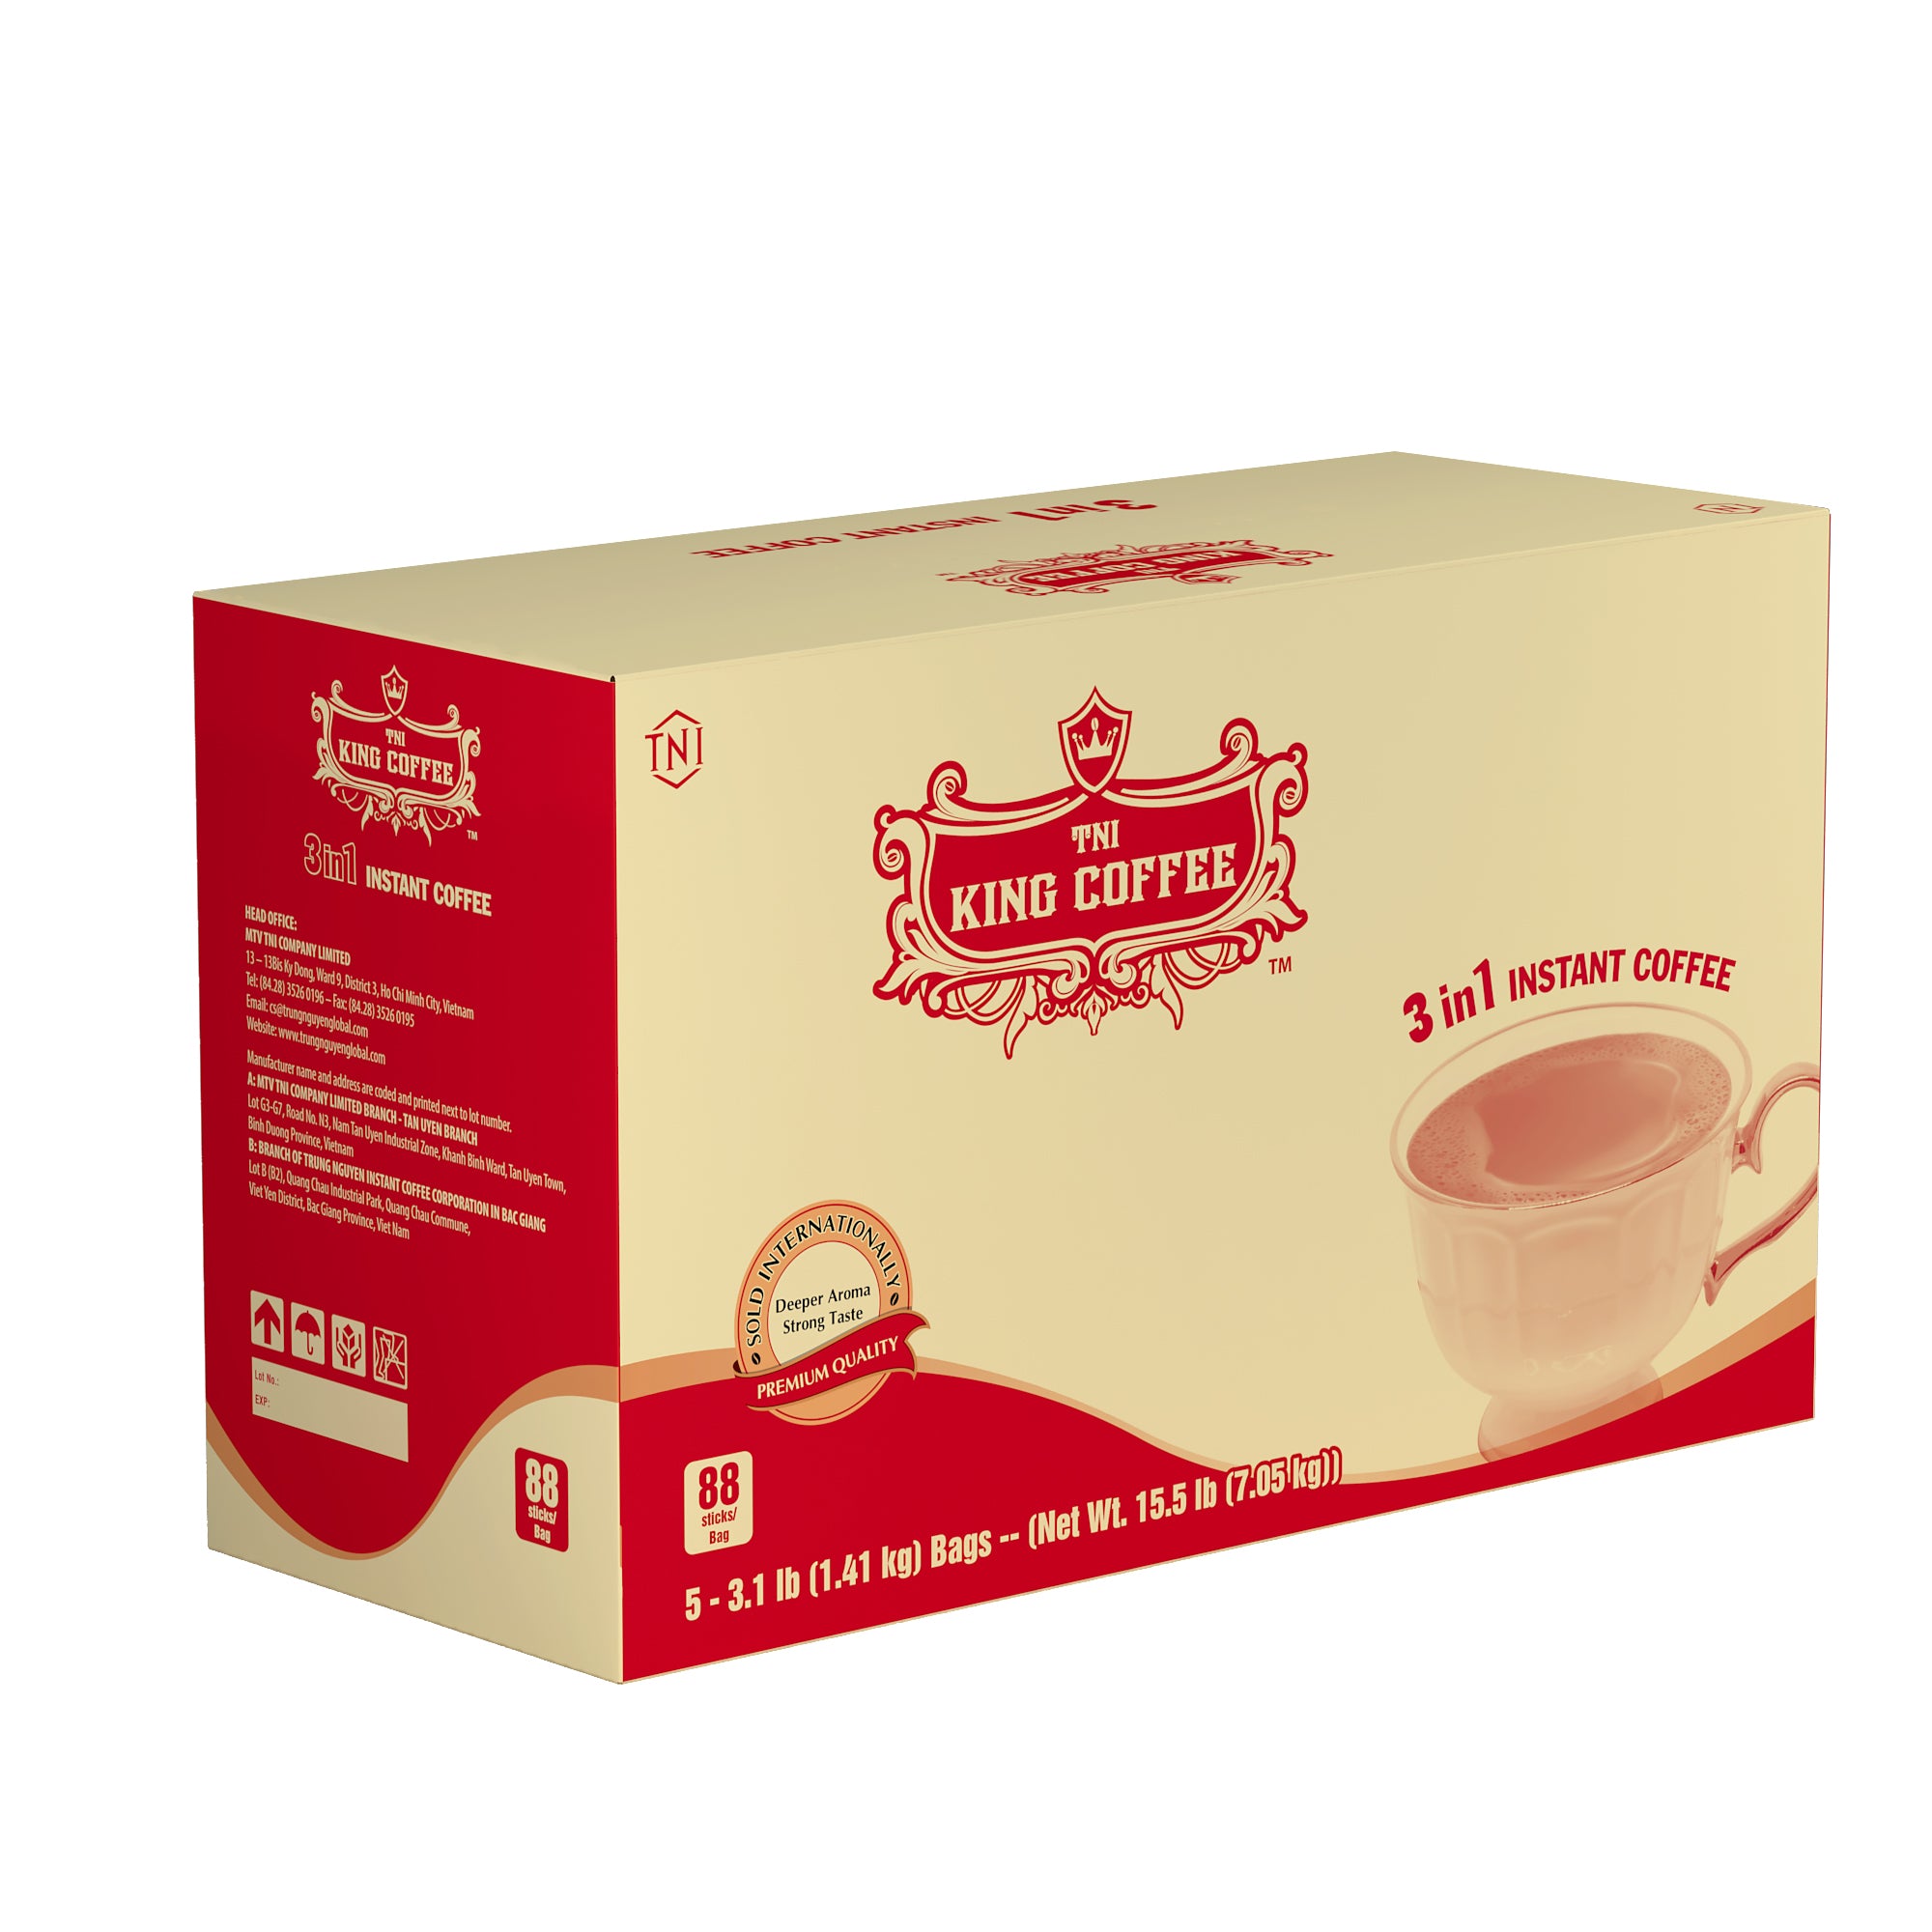 KING COFFEE 3in1 Instant Coffee 88 sticks x 0.56oz (16g) - 5 Bags 